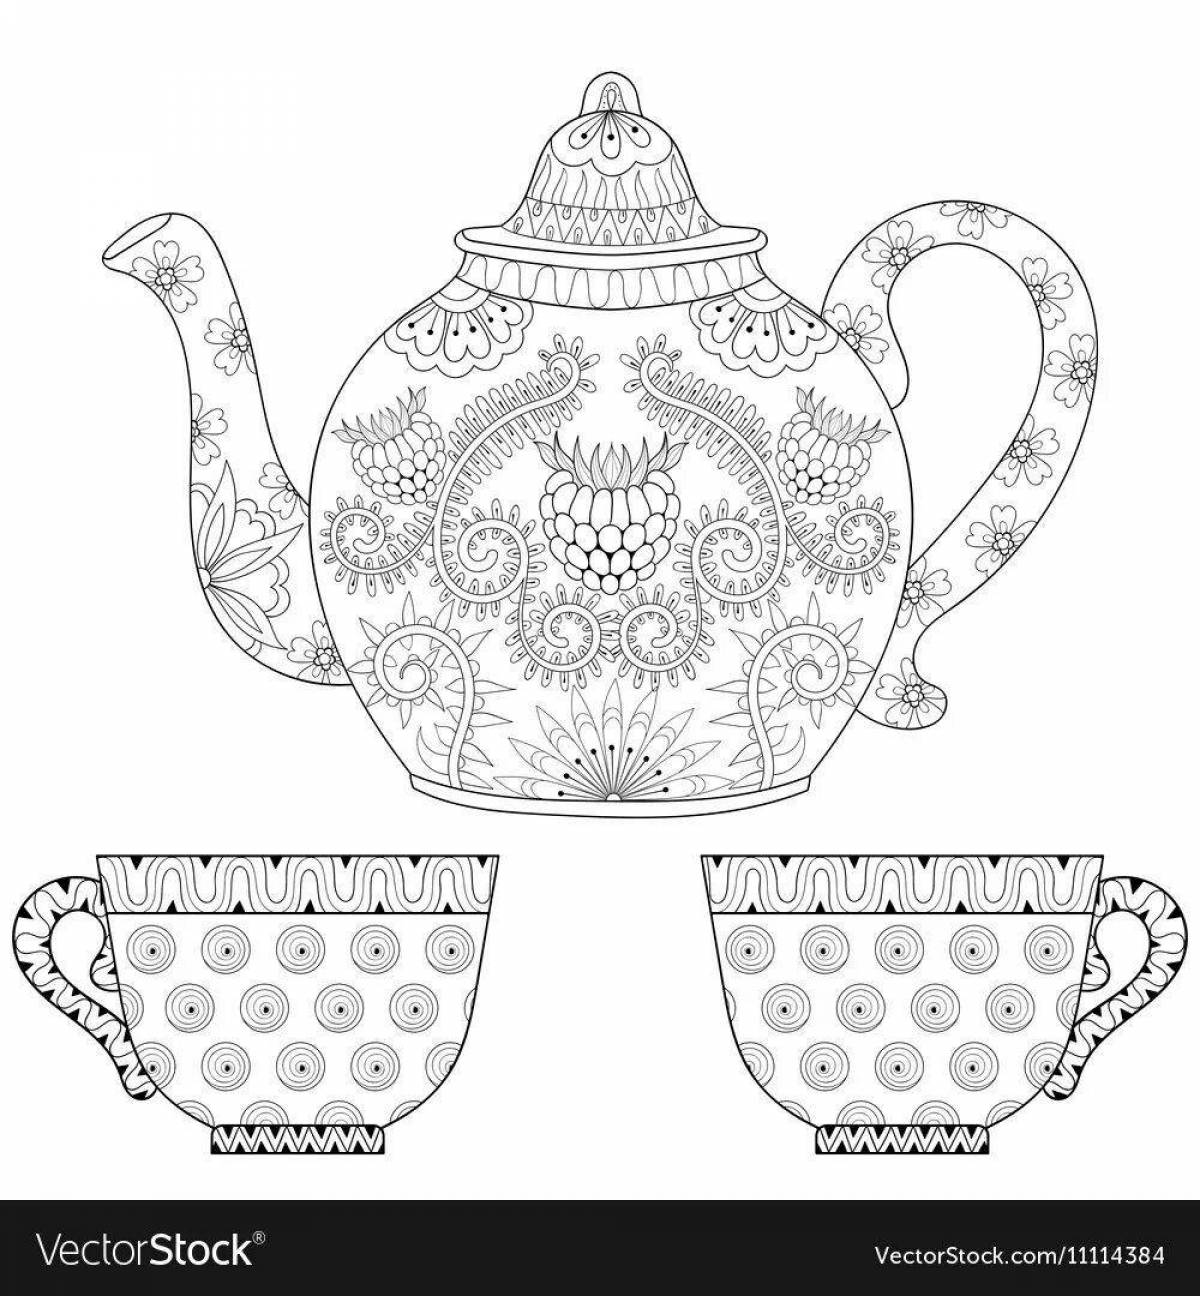 Playful teapot and mug coloring page